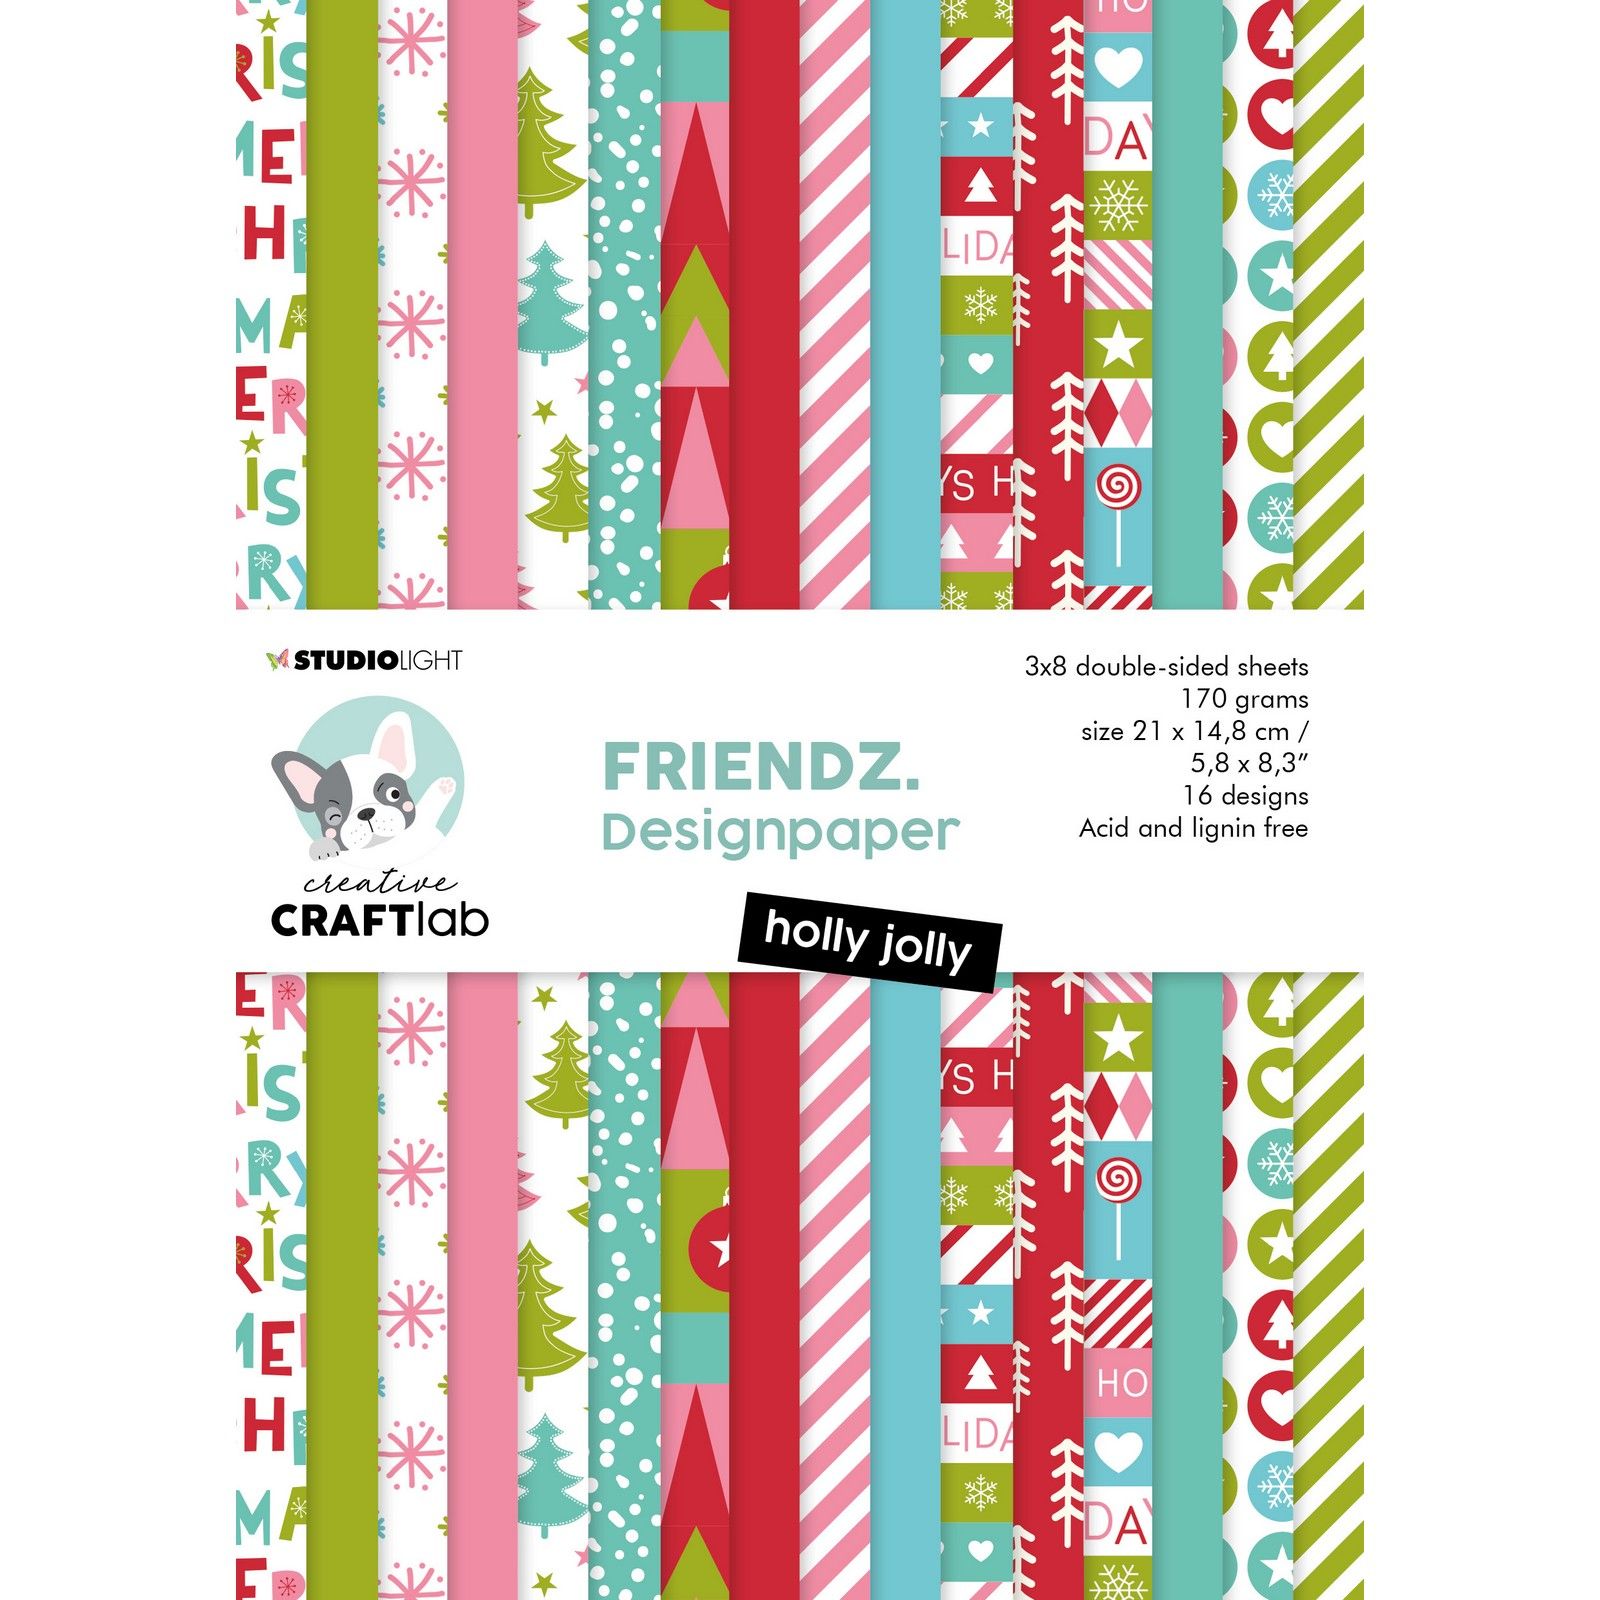 Creative Craftlab • Friendz Paper Pad Holly jolly